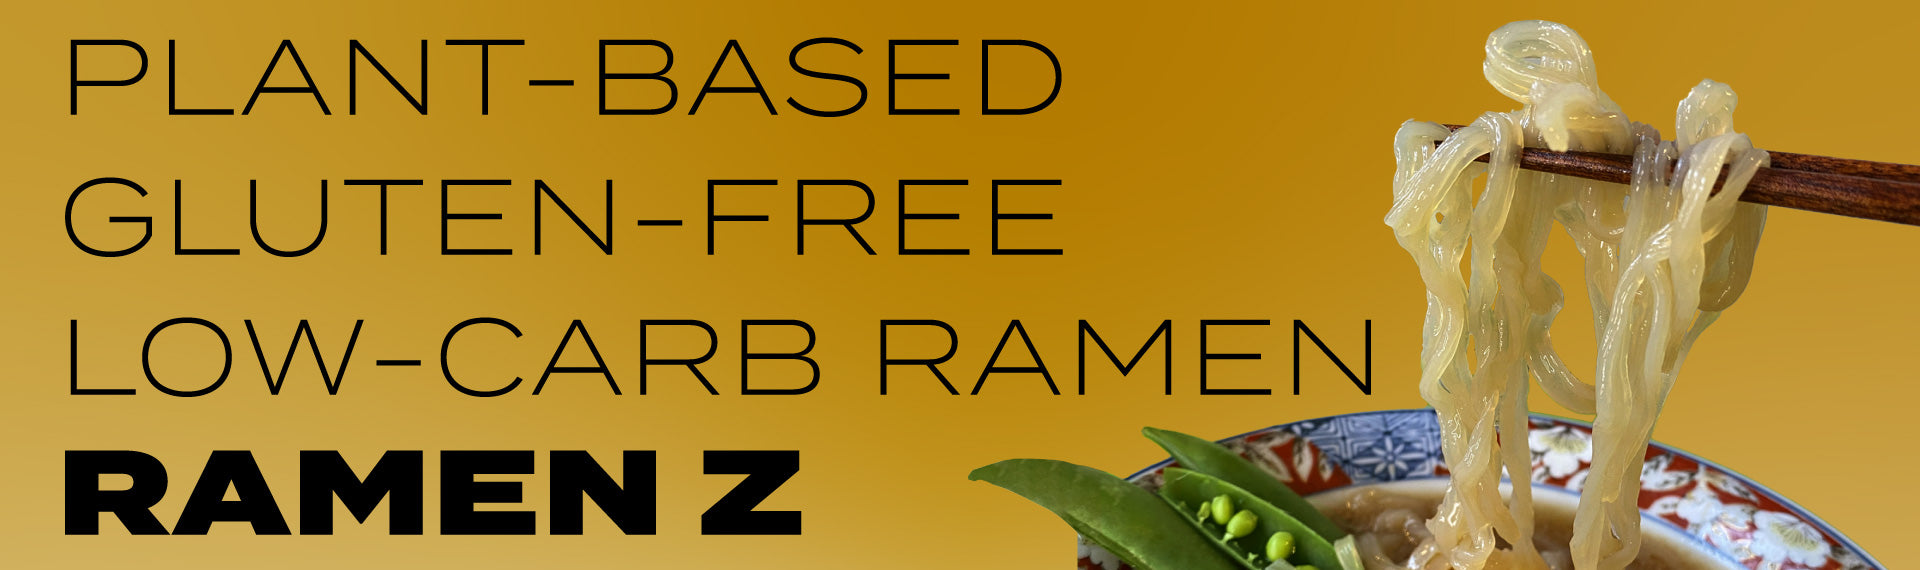 Vegan RAMEN Z plant based gluten free low carb ramen meal